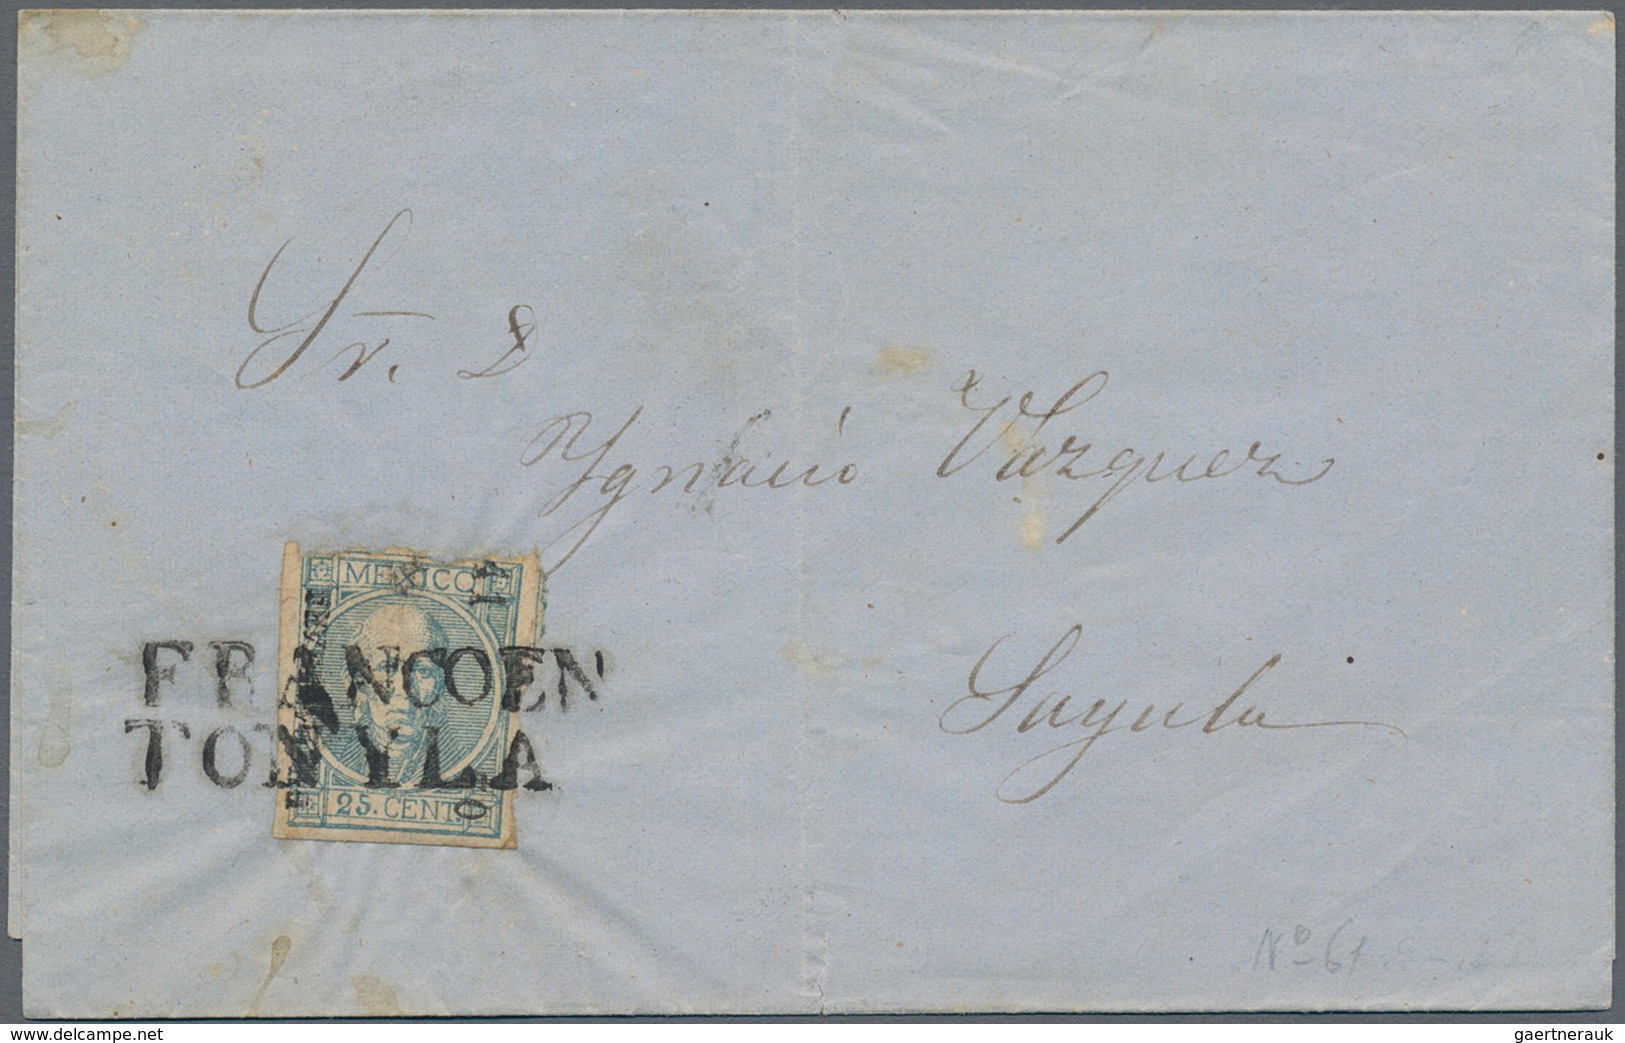 Mexiko: 1868/82 (ca.), inland covers (12) with various issues inc. fancy markings viz. "FRANCO EN C.